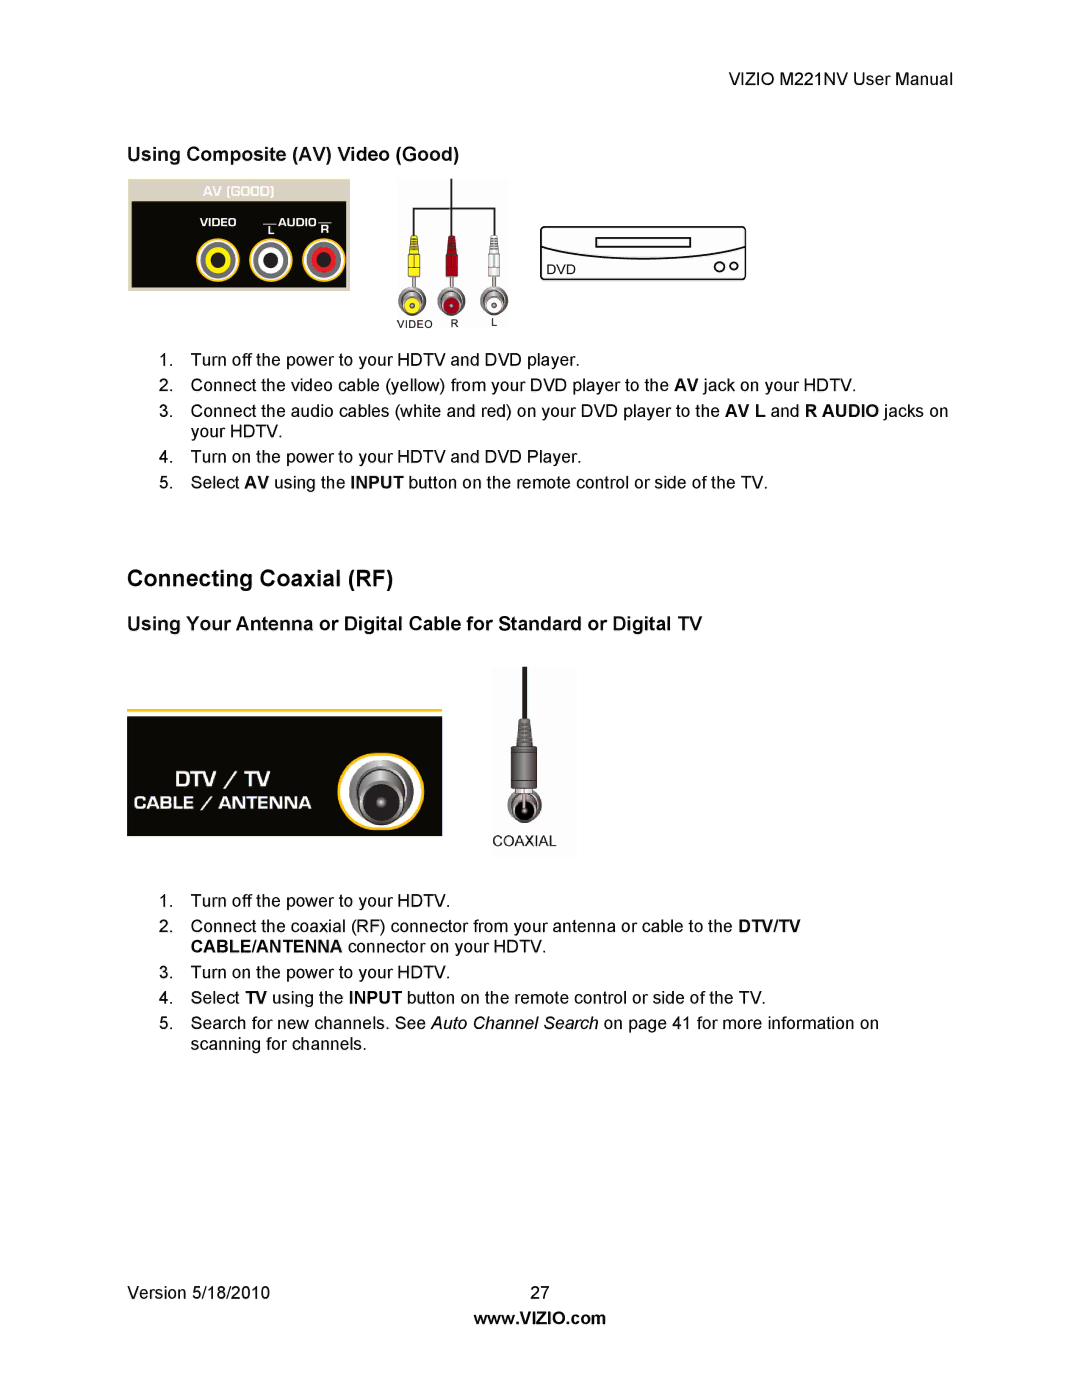 Vizio M221NV user manual Connecting Coaxial RF, Using Composite AV Video Good 